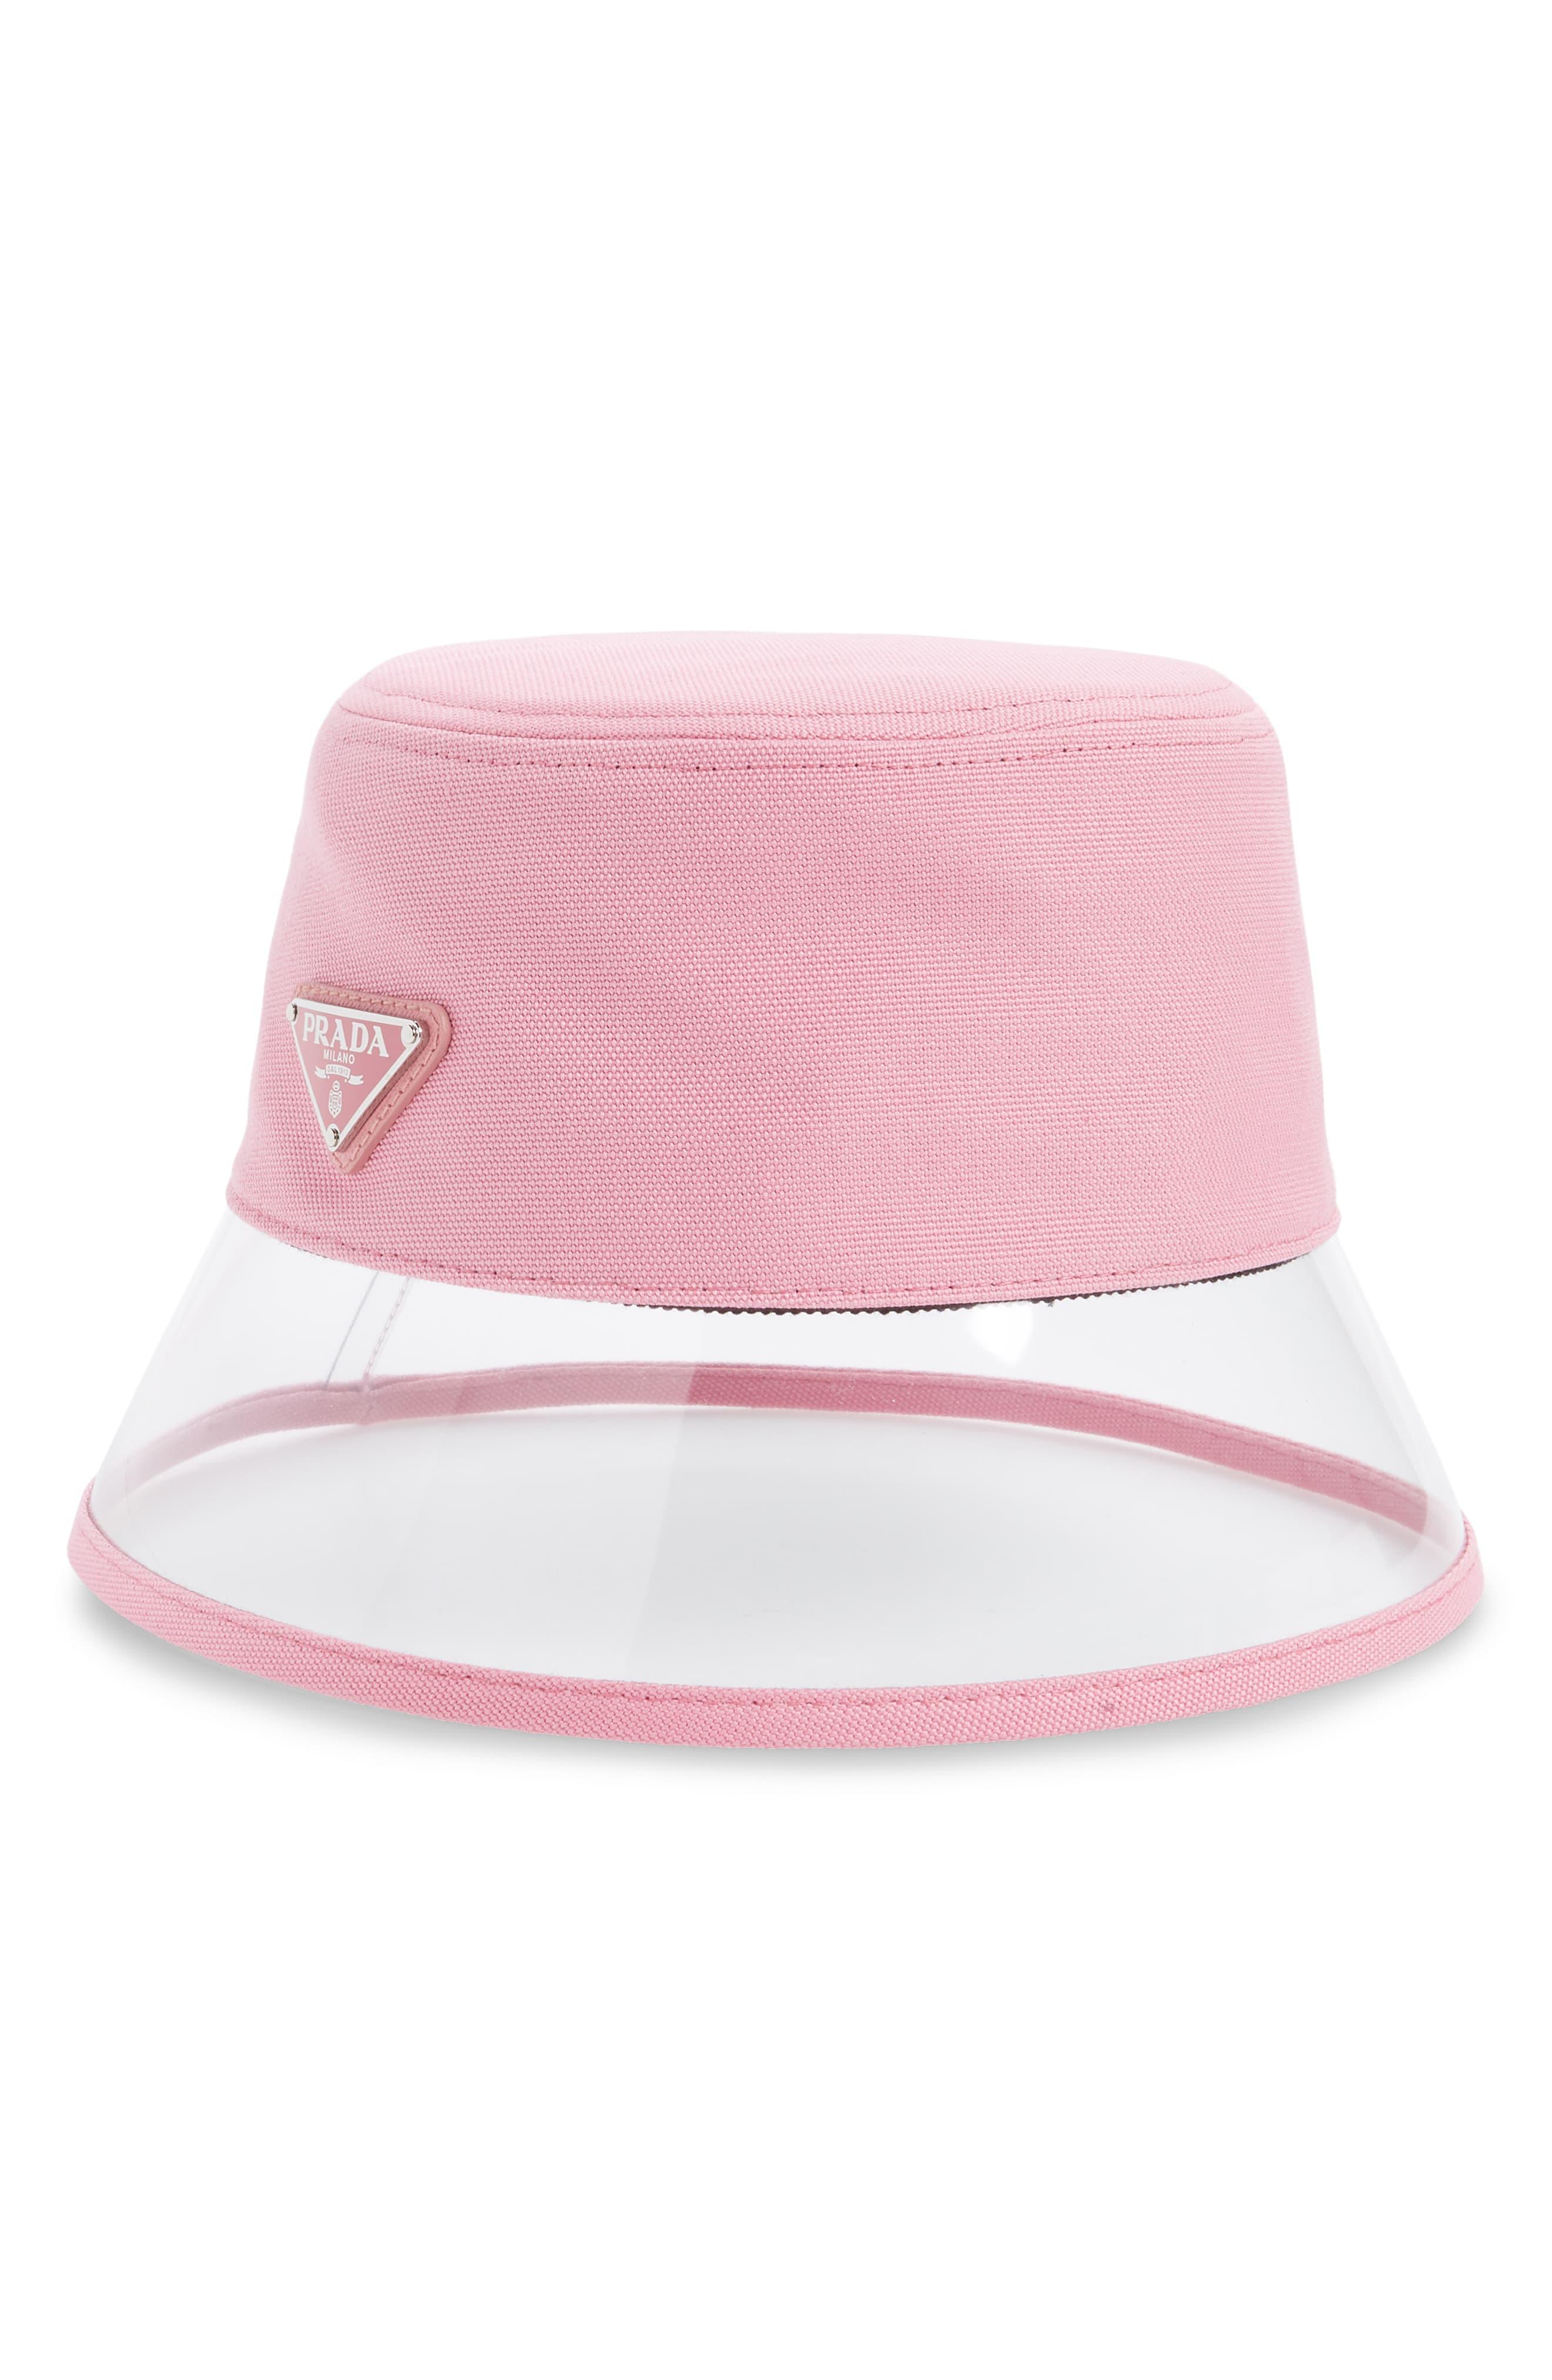 prada pink bucket hat